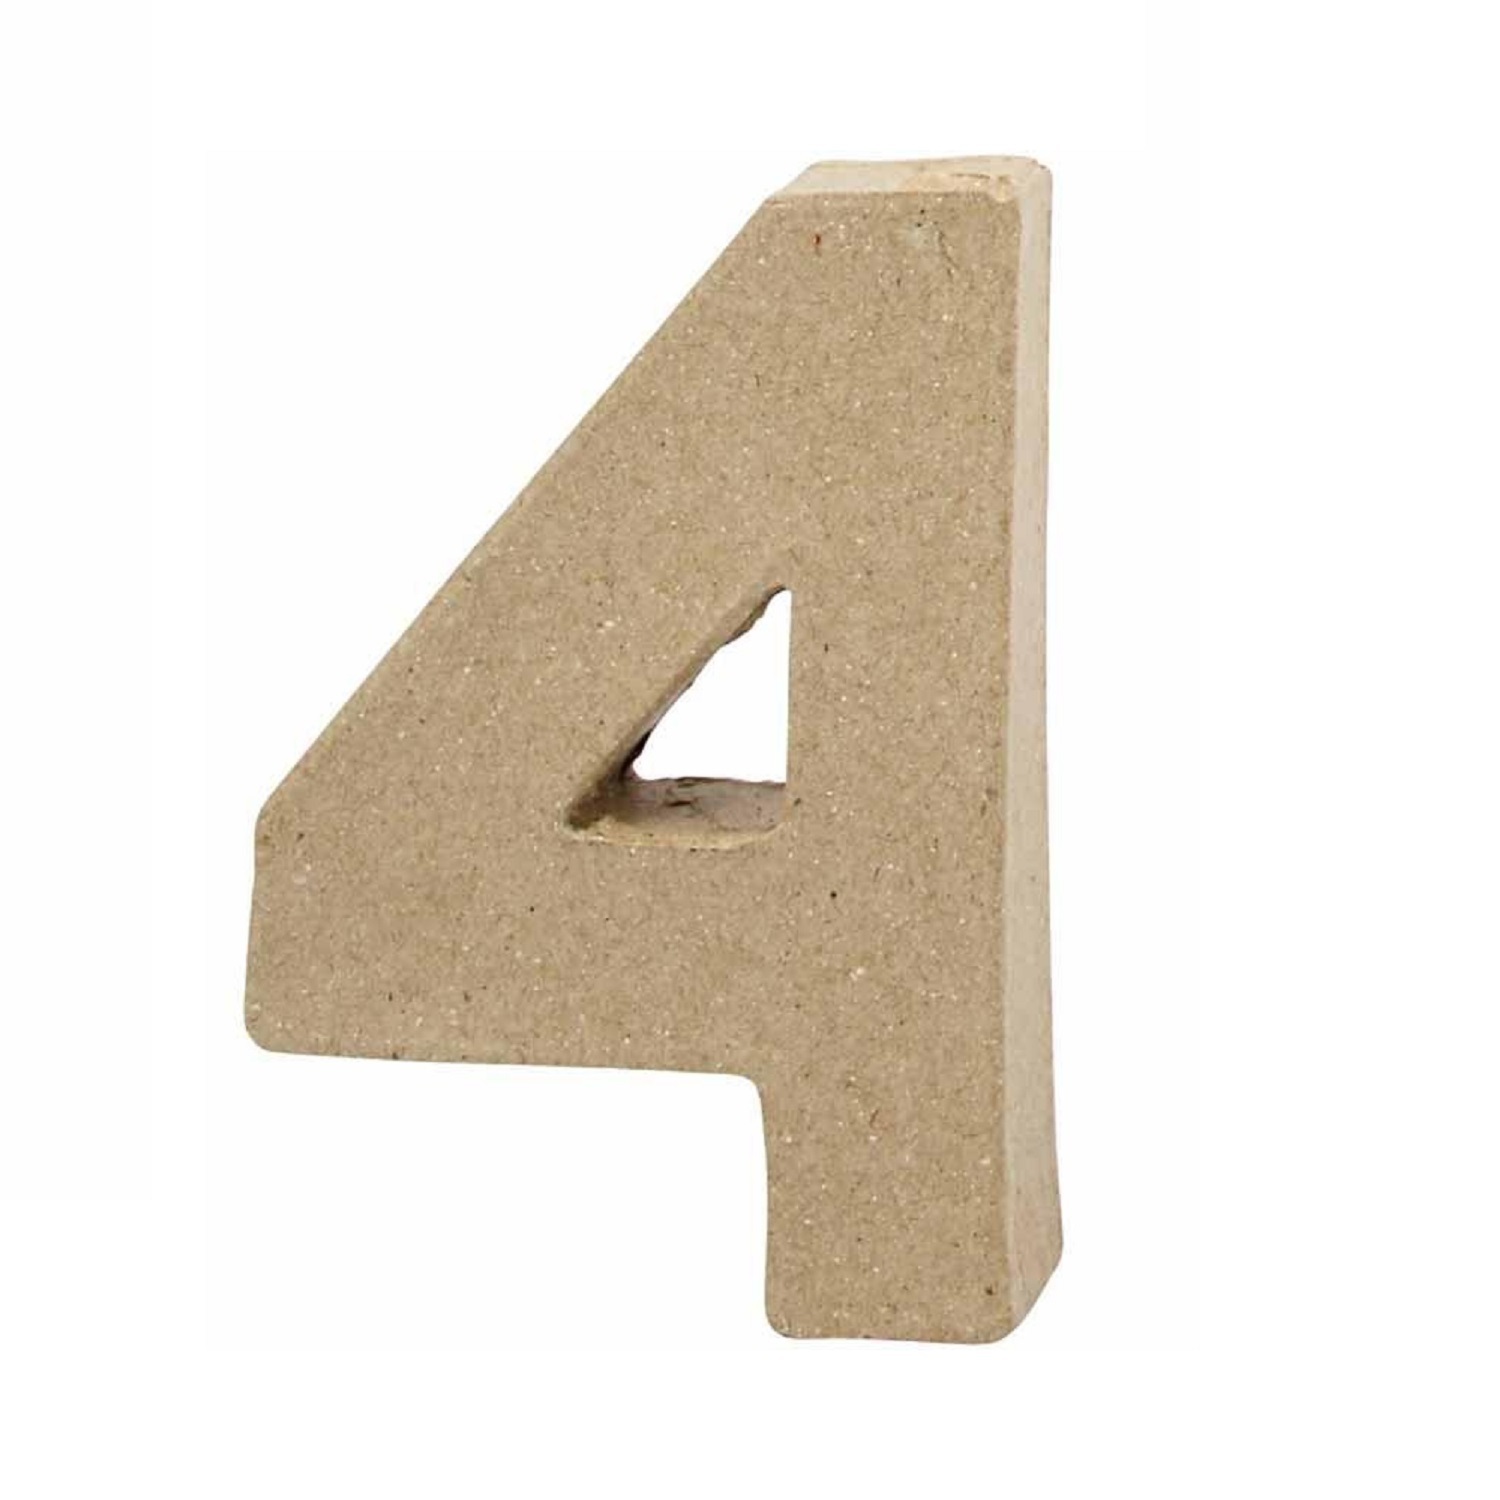 4 Papier Mache Number